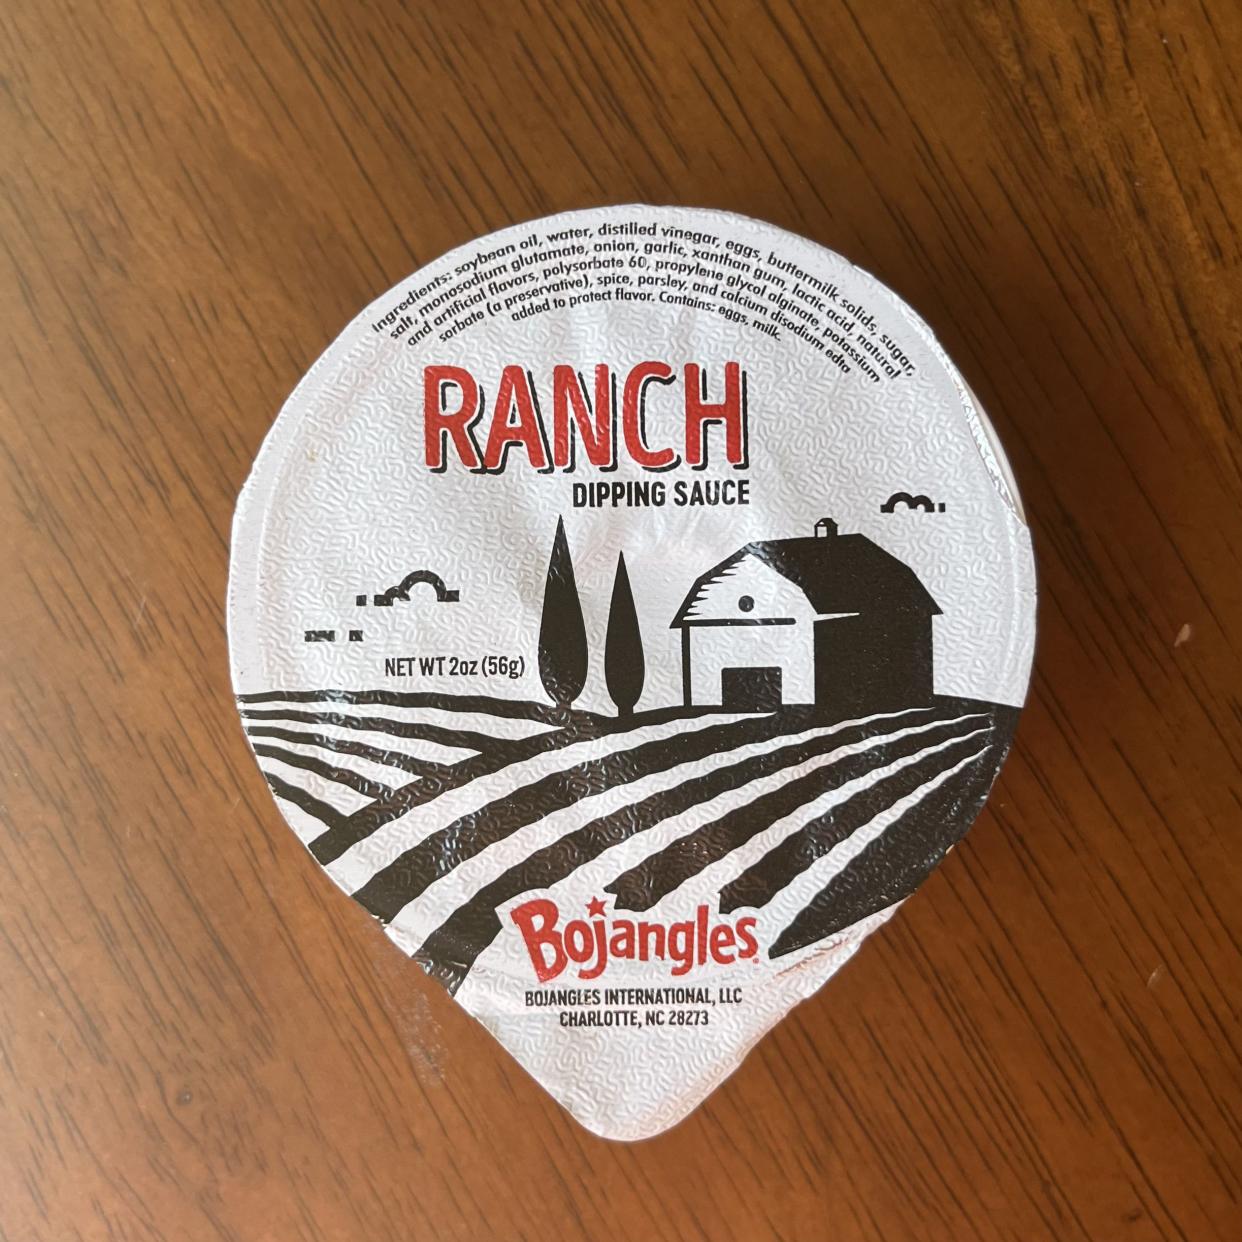 Bojangles Ranch sauce